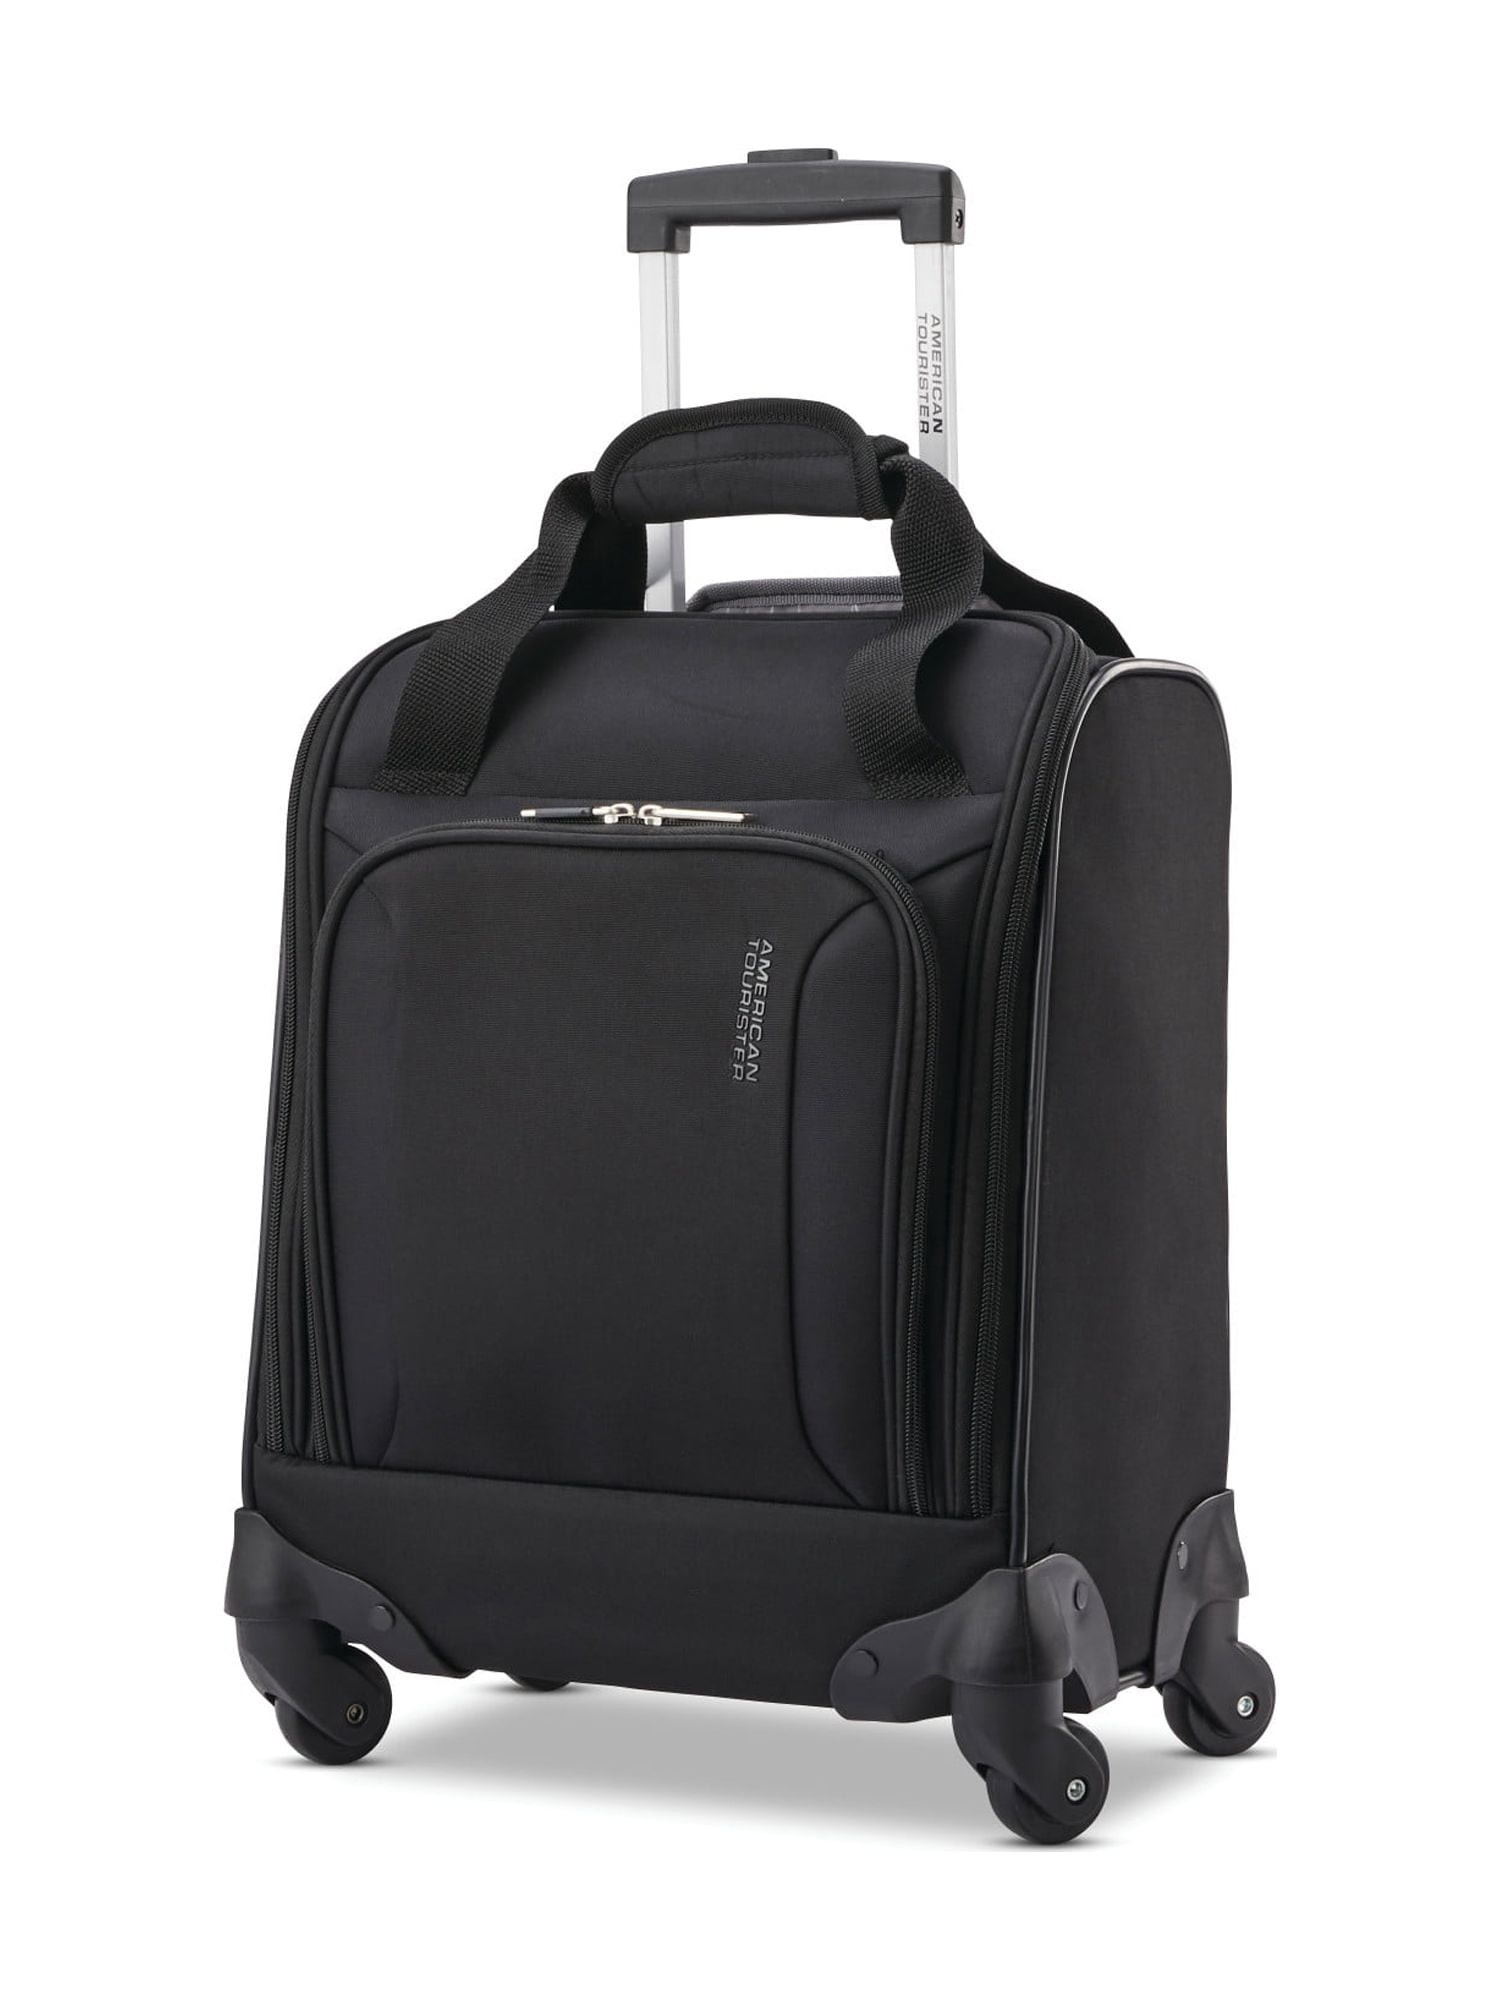 American Tourister Atmosphera Underseater Spinner Luggage - Walmart.com